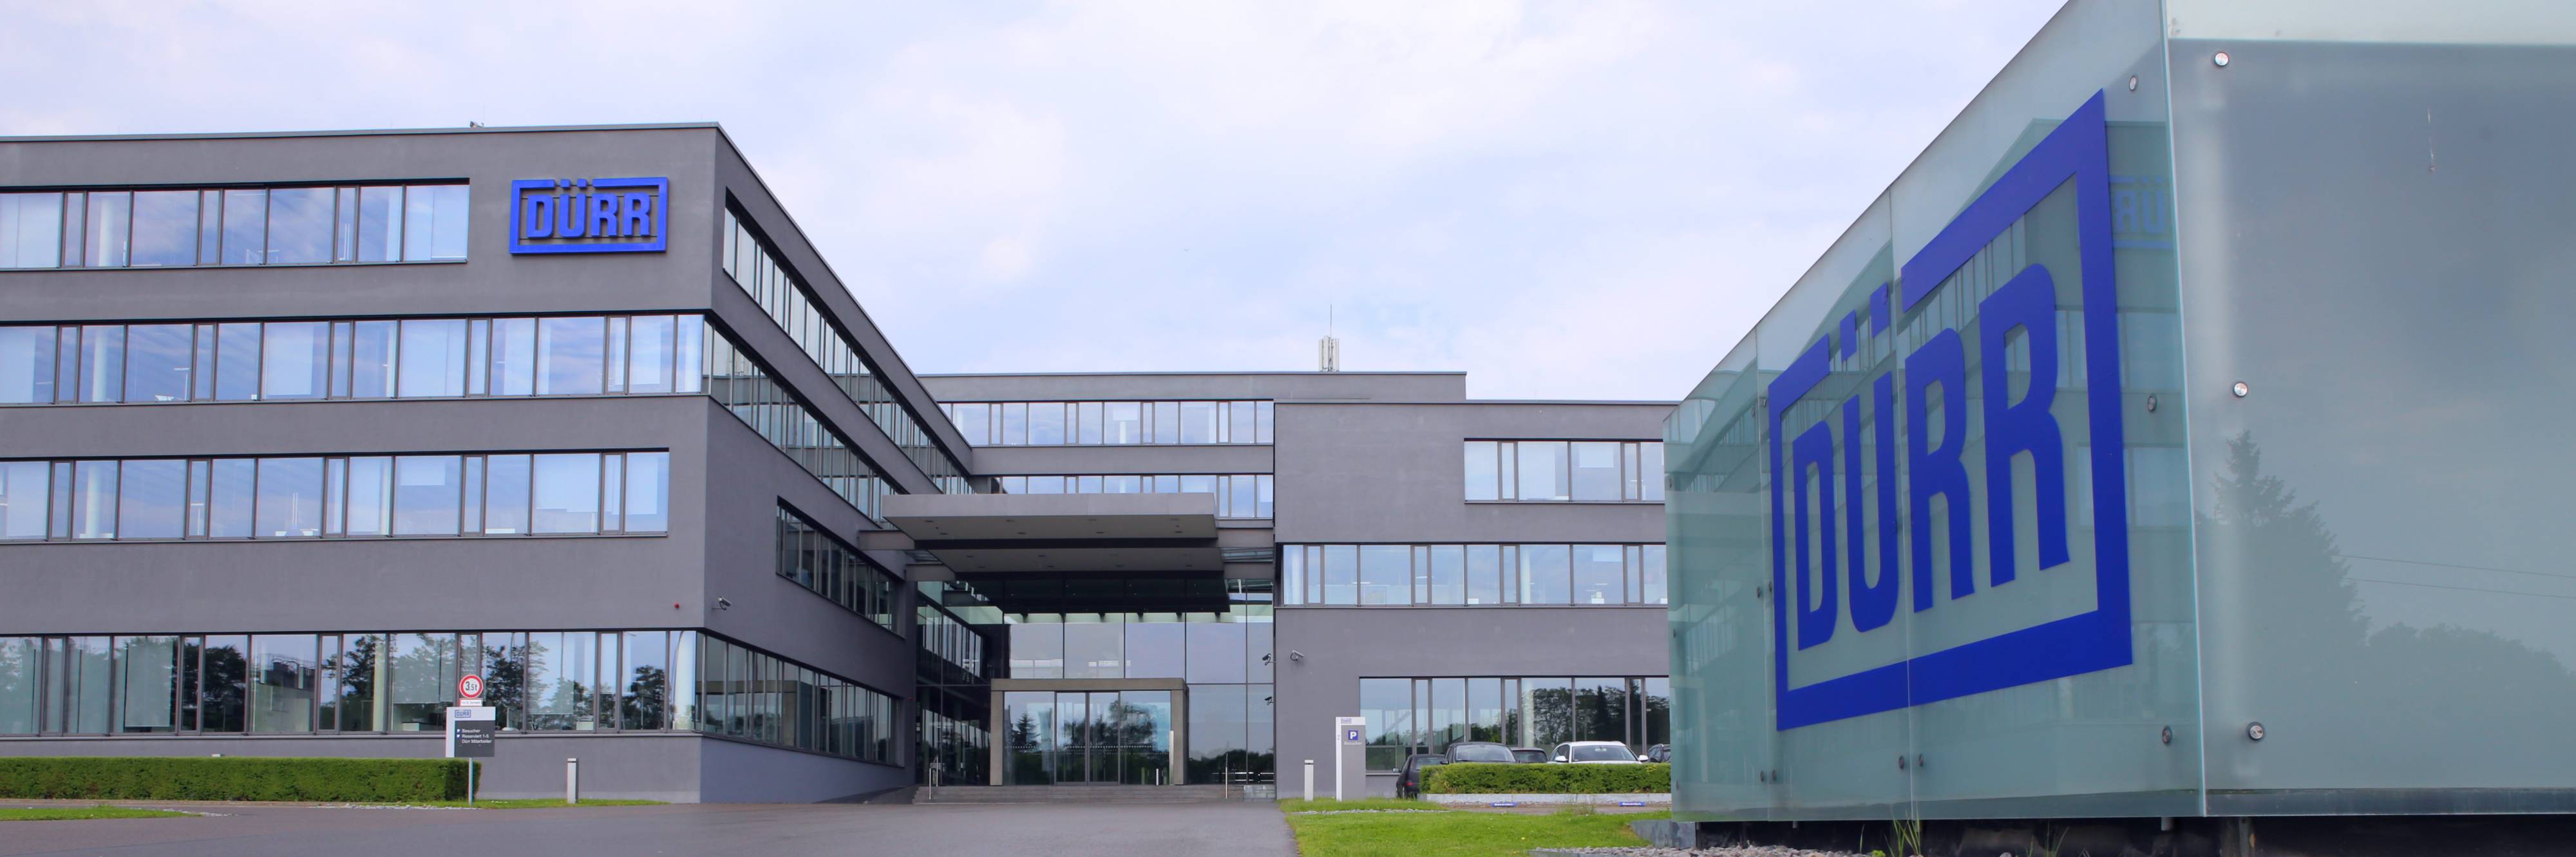 Dürr Headquarters Building front view in Bietigheim-Bissingen, Germany